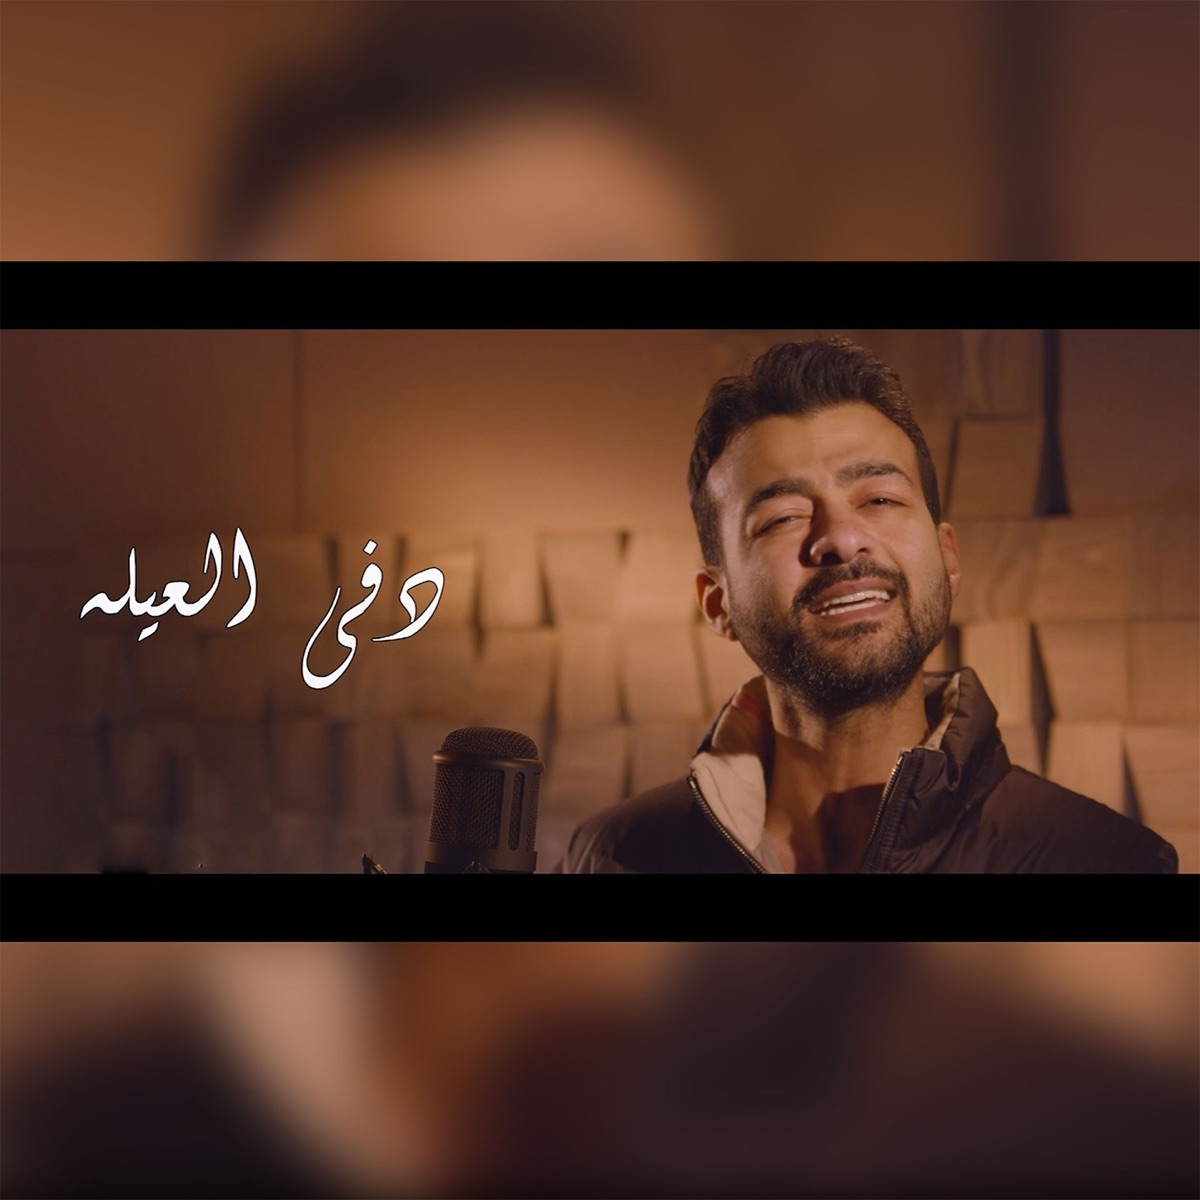 ارمي حمولك عليا - Single - Album by Haytham Shaker - Apple Music